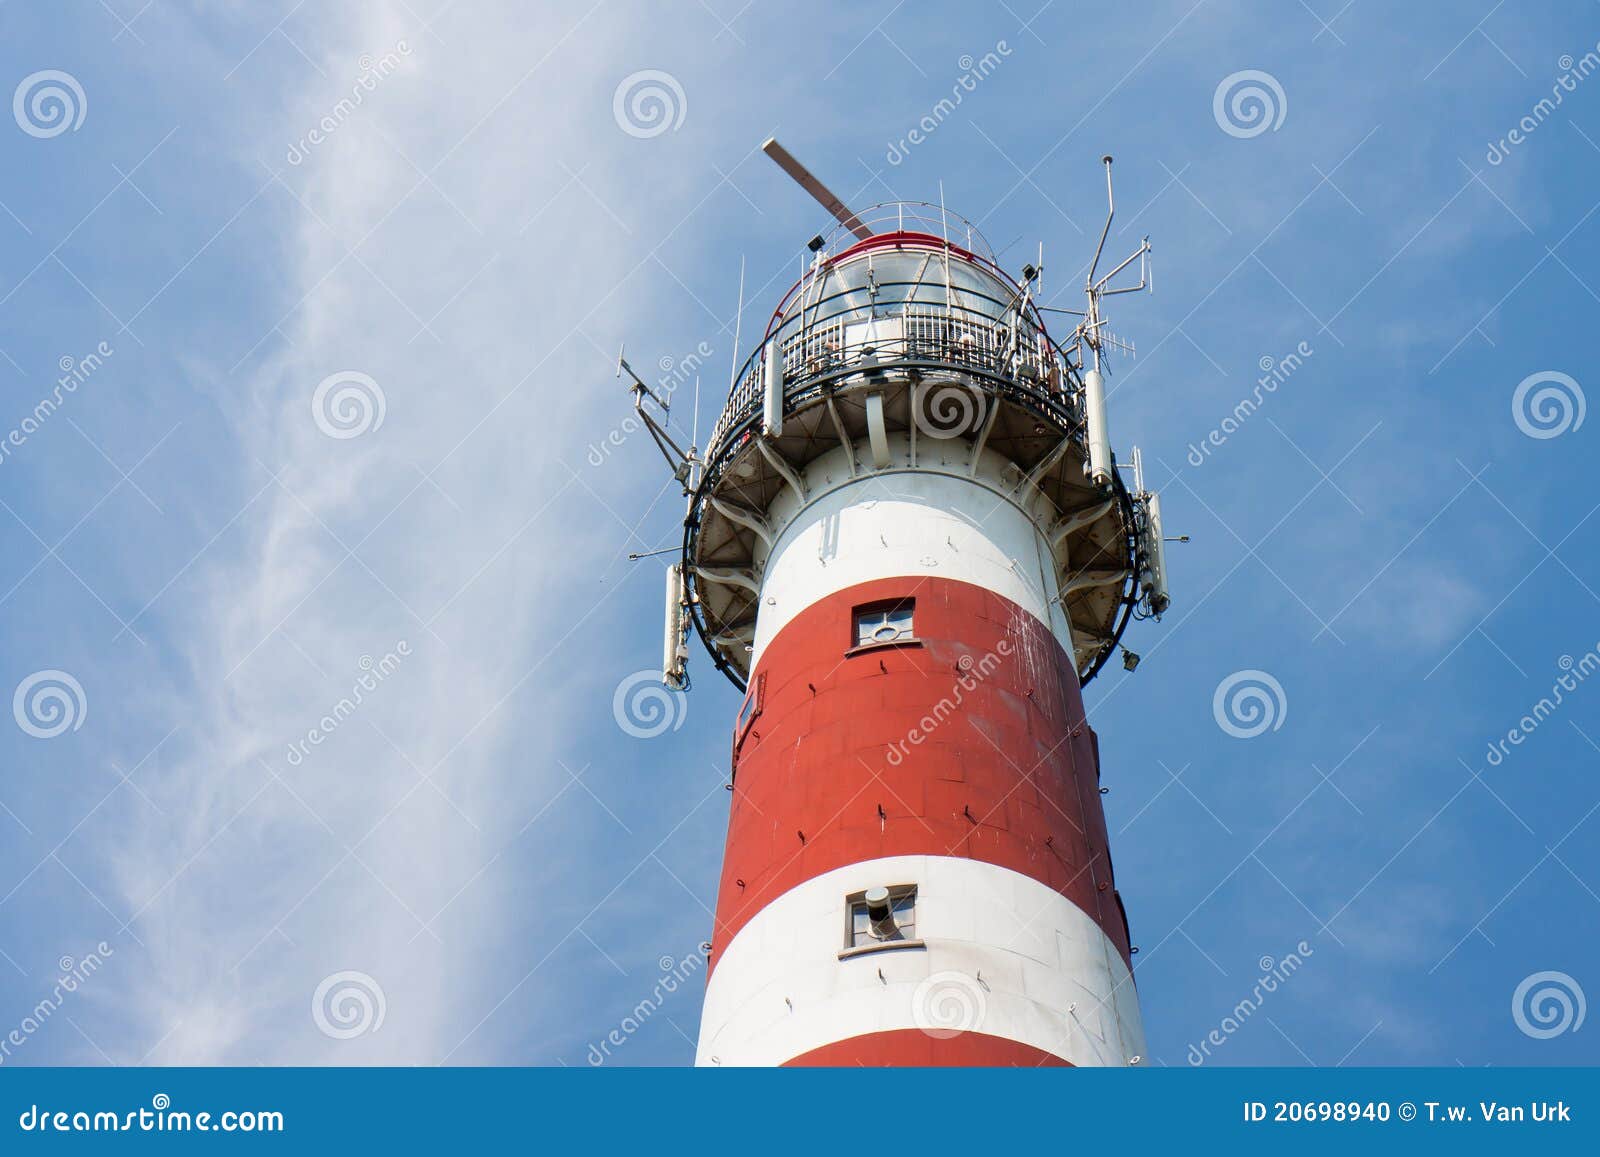 dutch lighthouse of ameland